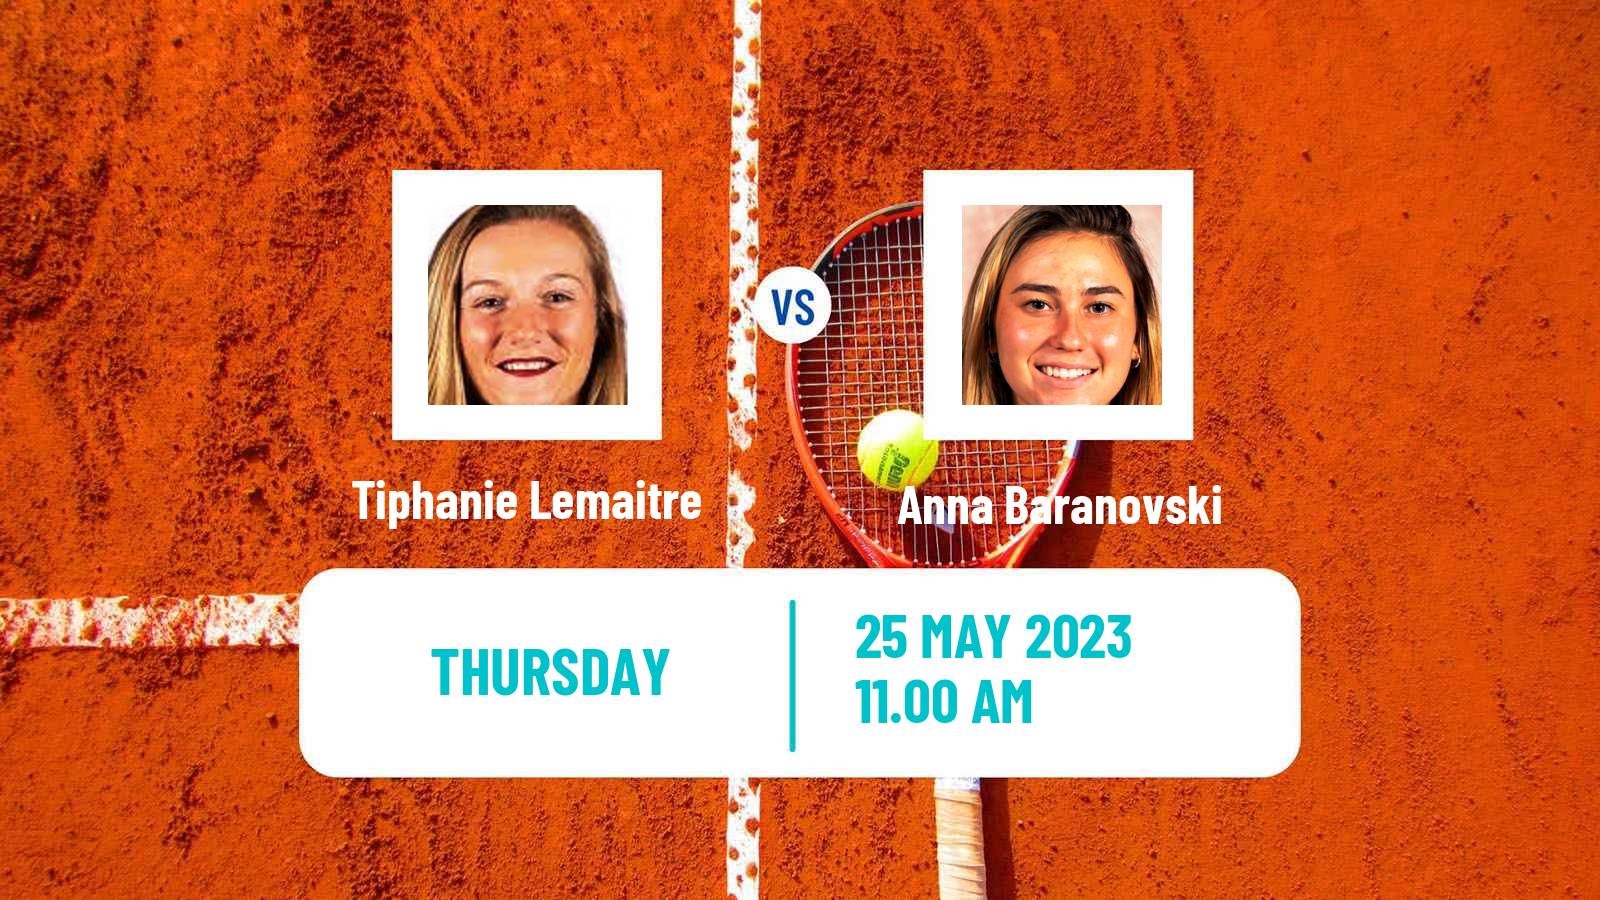 Tennis ITF W15 Huntsville Al Women Tiphanie Lemaitre - Anna Baranovski